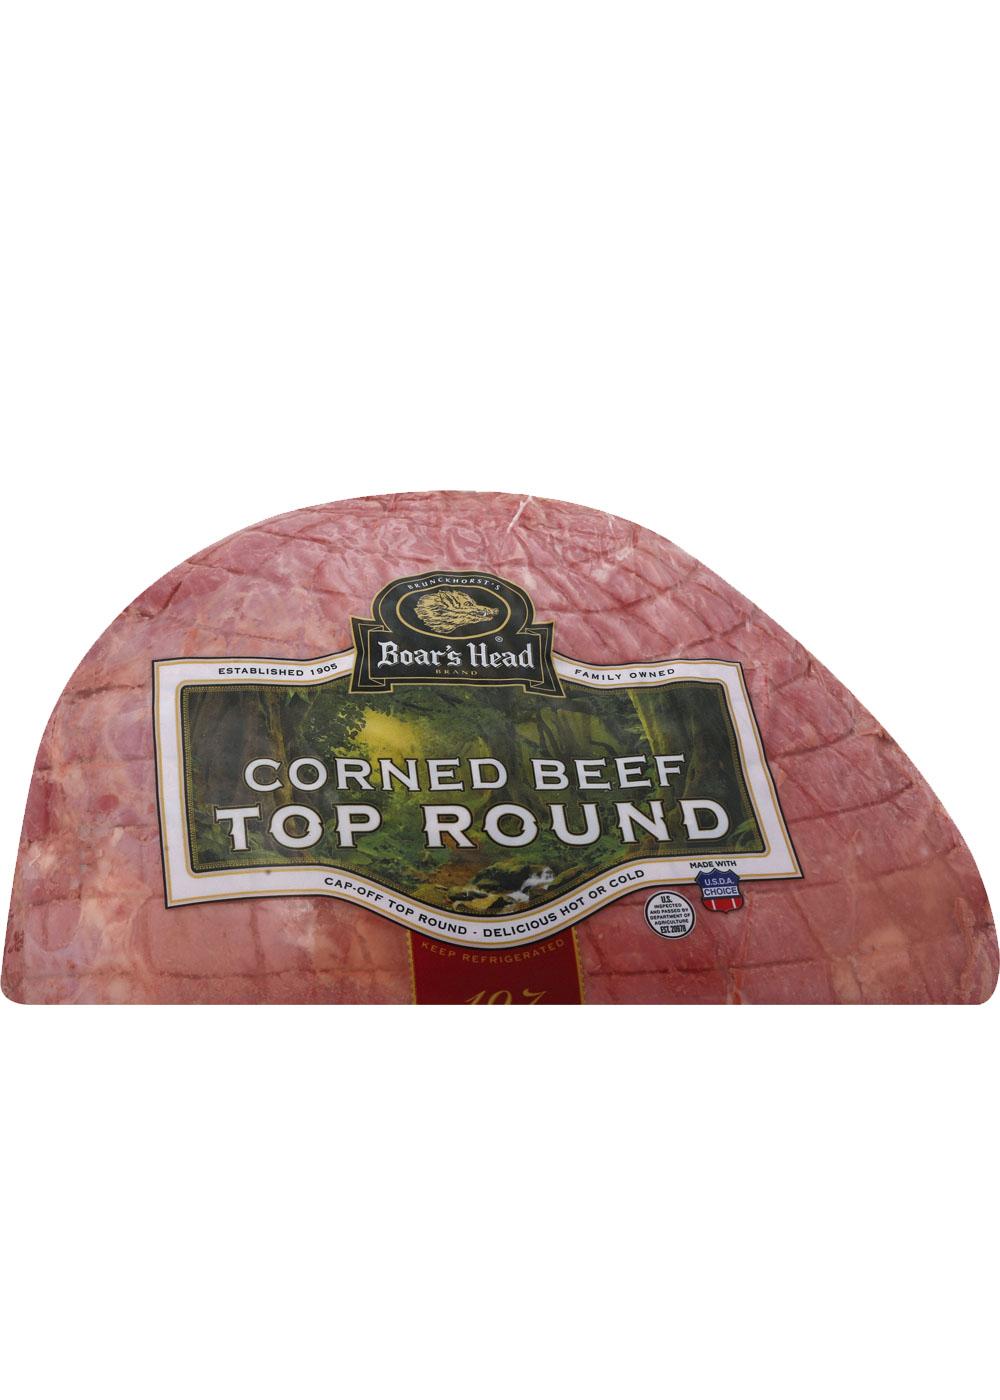 Boar's Head Top Round Corned Beef, Custom Sliced; image 1 of 2